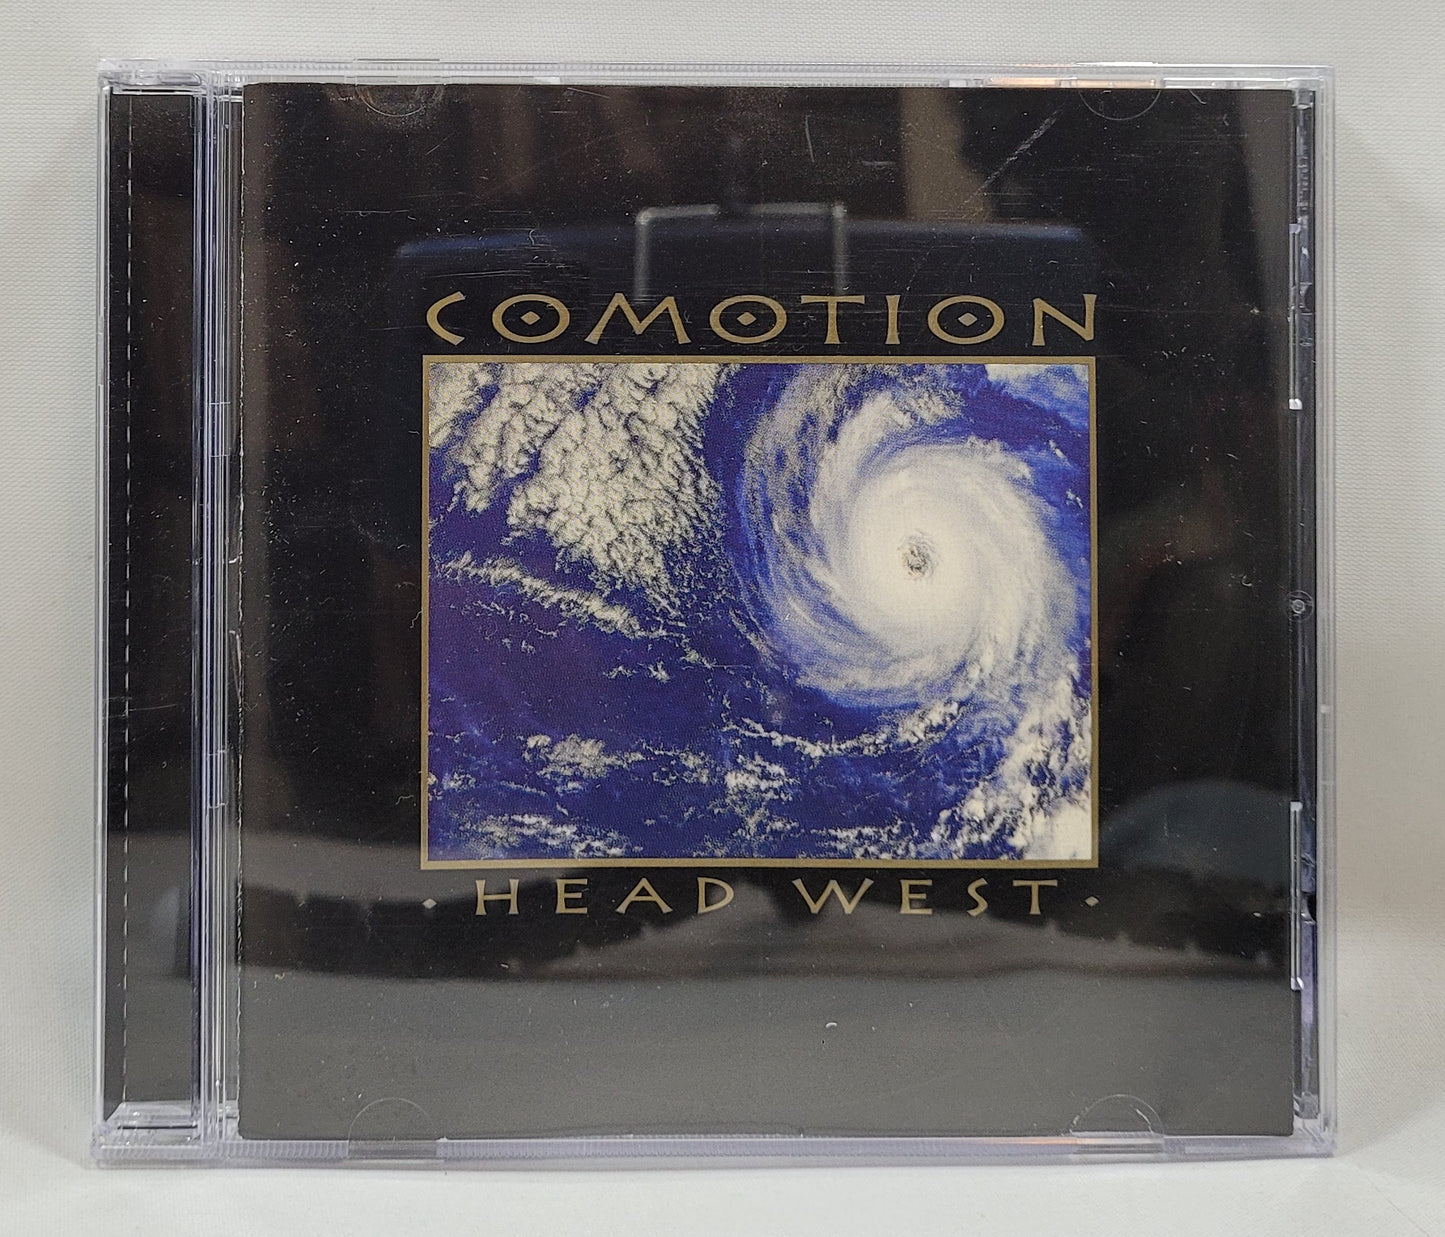 Comotion - Head West [CD]